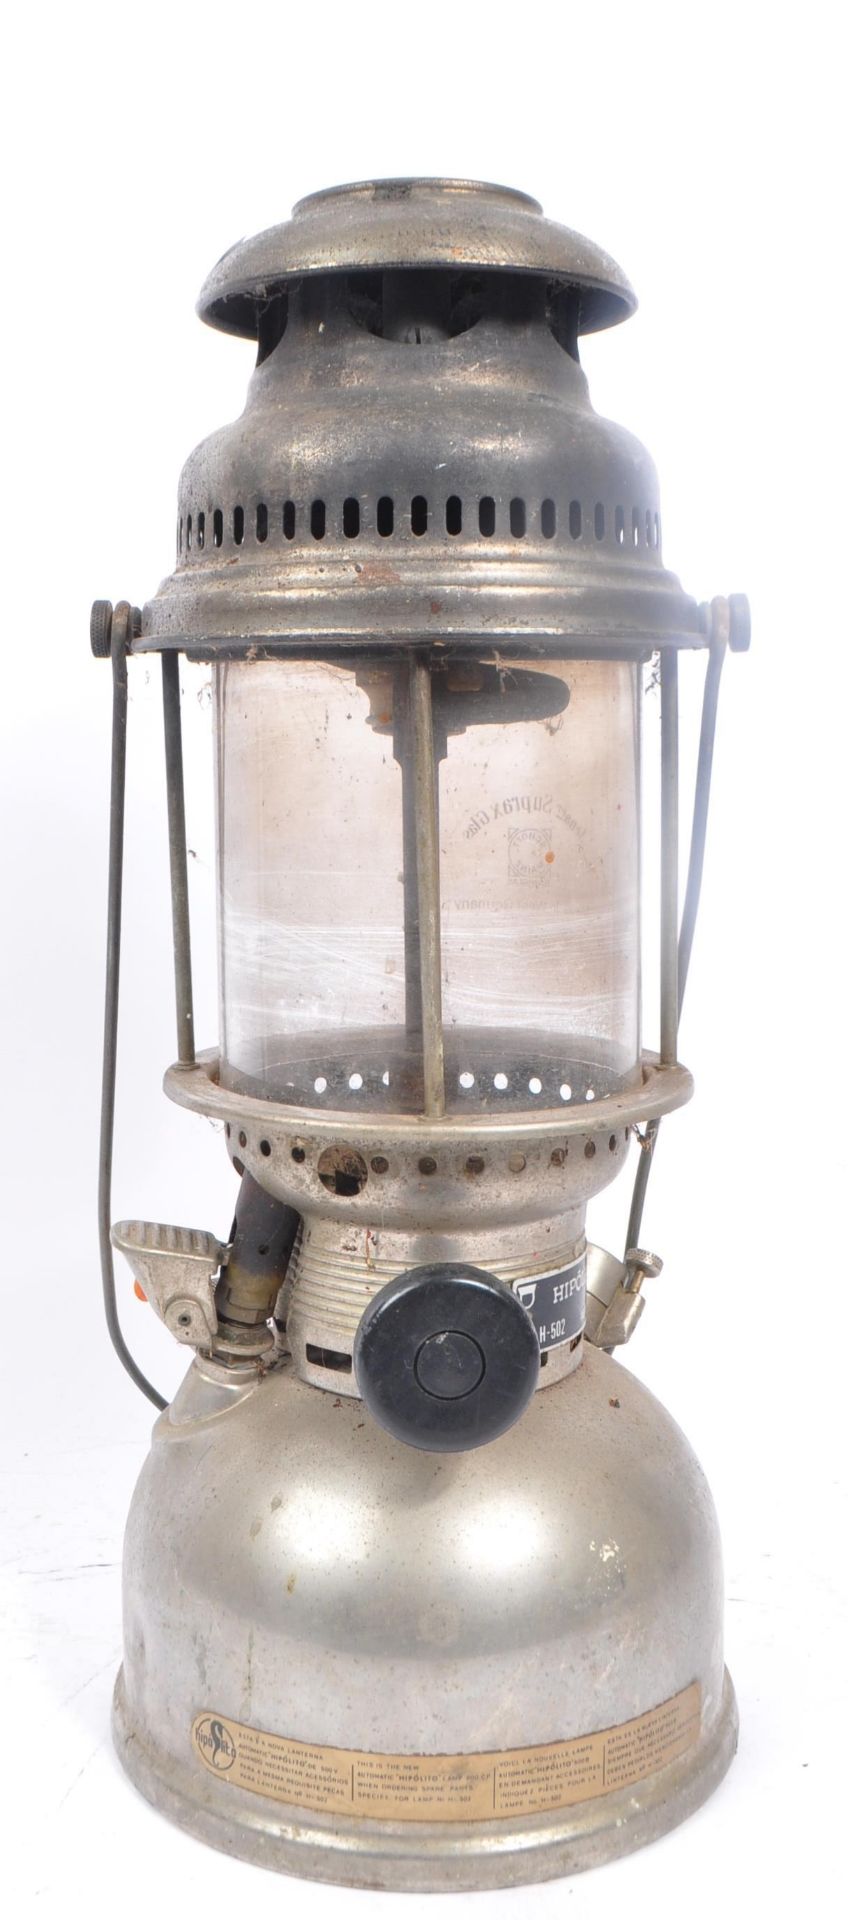 HIPOLITO - 20TH CENTURY H-502 AUTOMATIC PARAFFIN LAMP